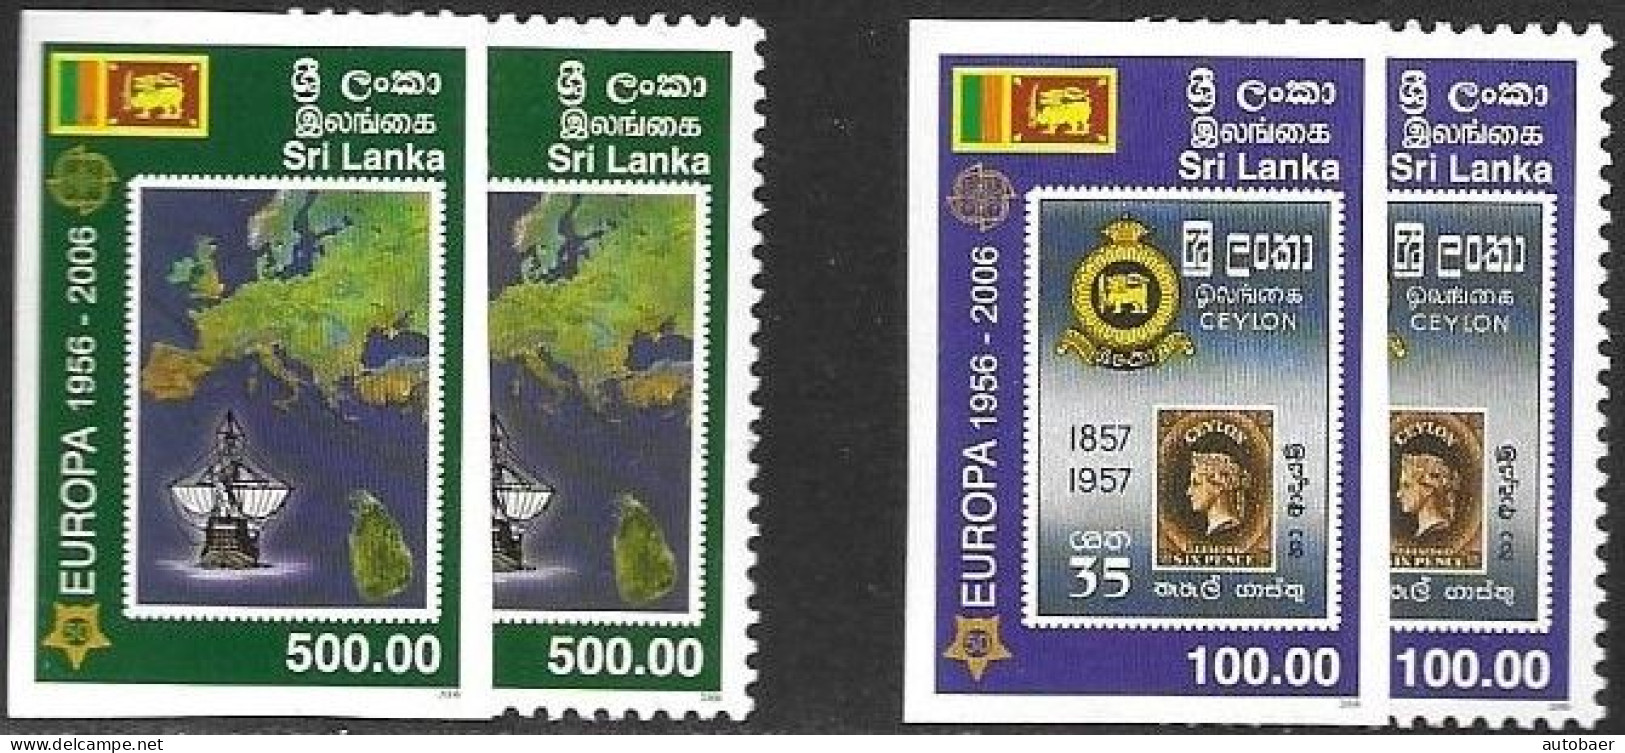 Sri Lanka Srilanka 2006 50 Years Europa Cept Stamps Mi.no. 1525-26U MNH ** Postfr. Neuf Unperforated Non-dentelé !! - Sri Lanka (Ceylan) (1948-...)